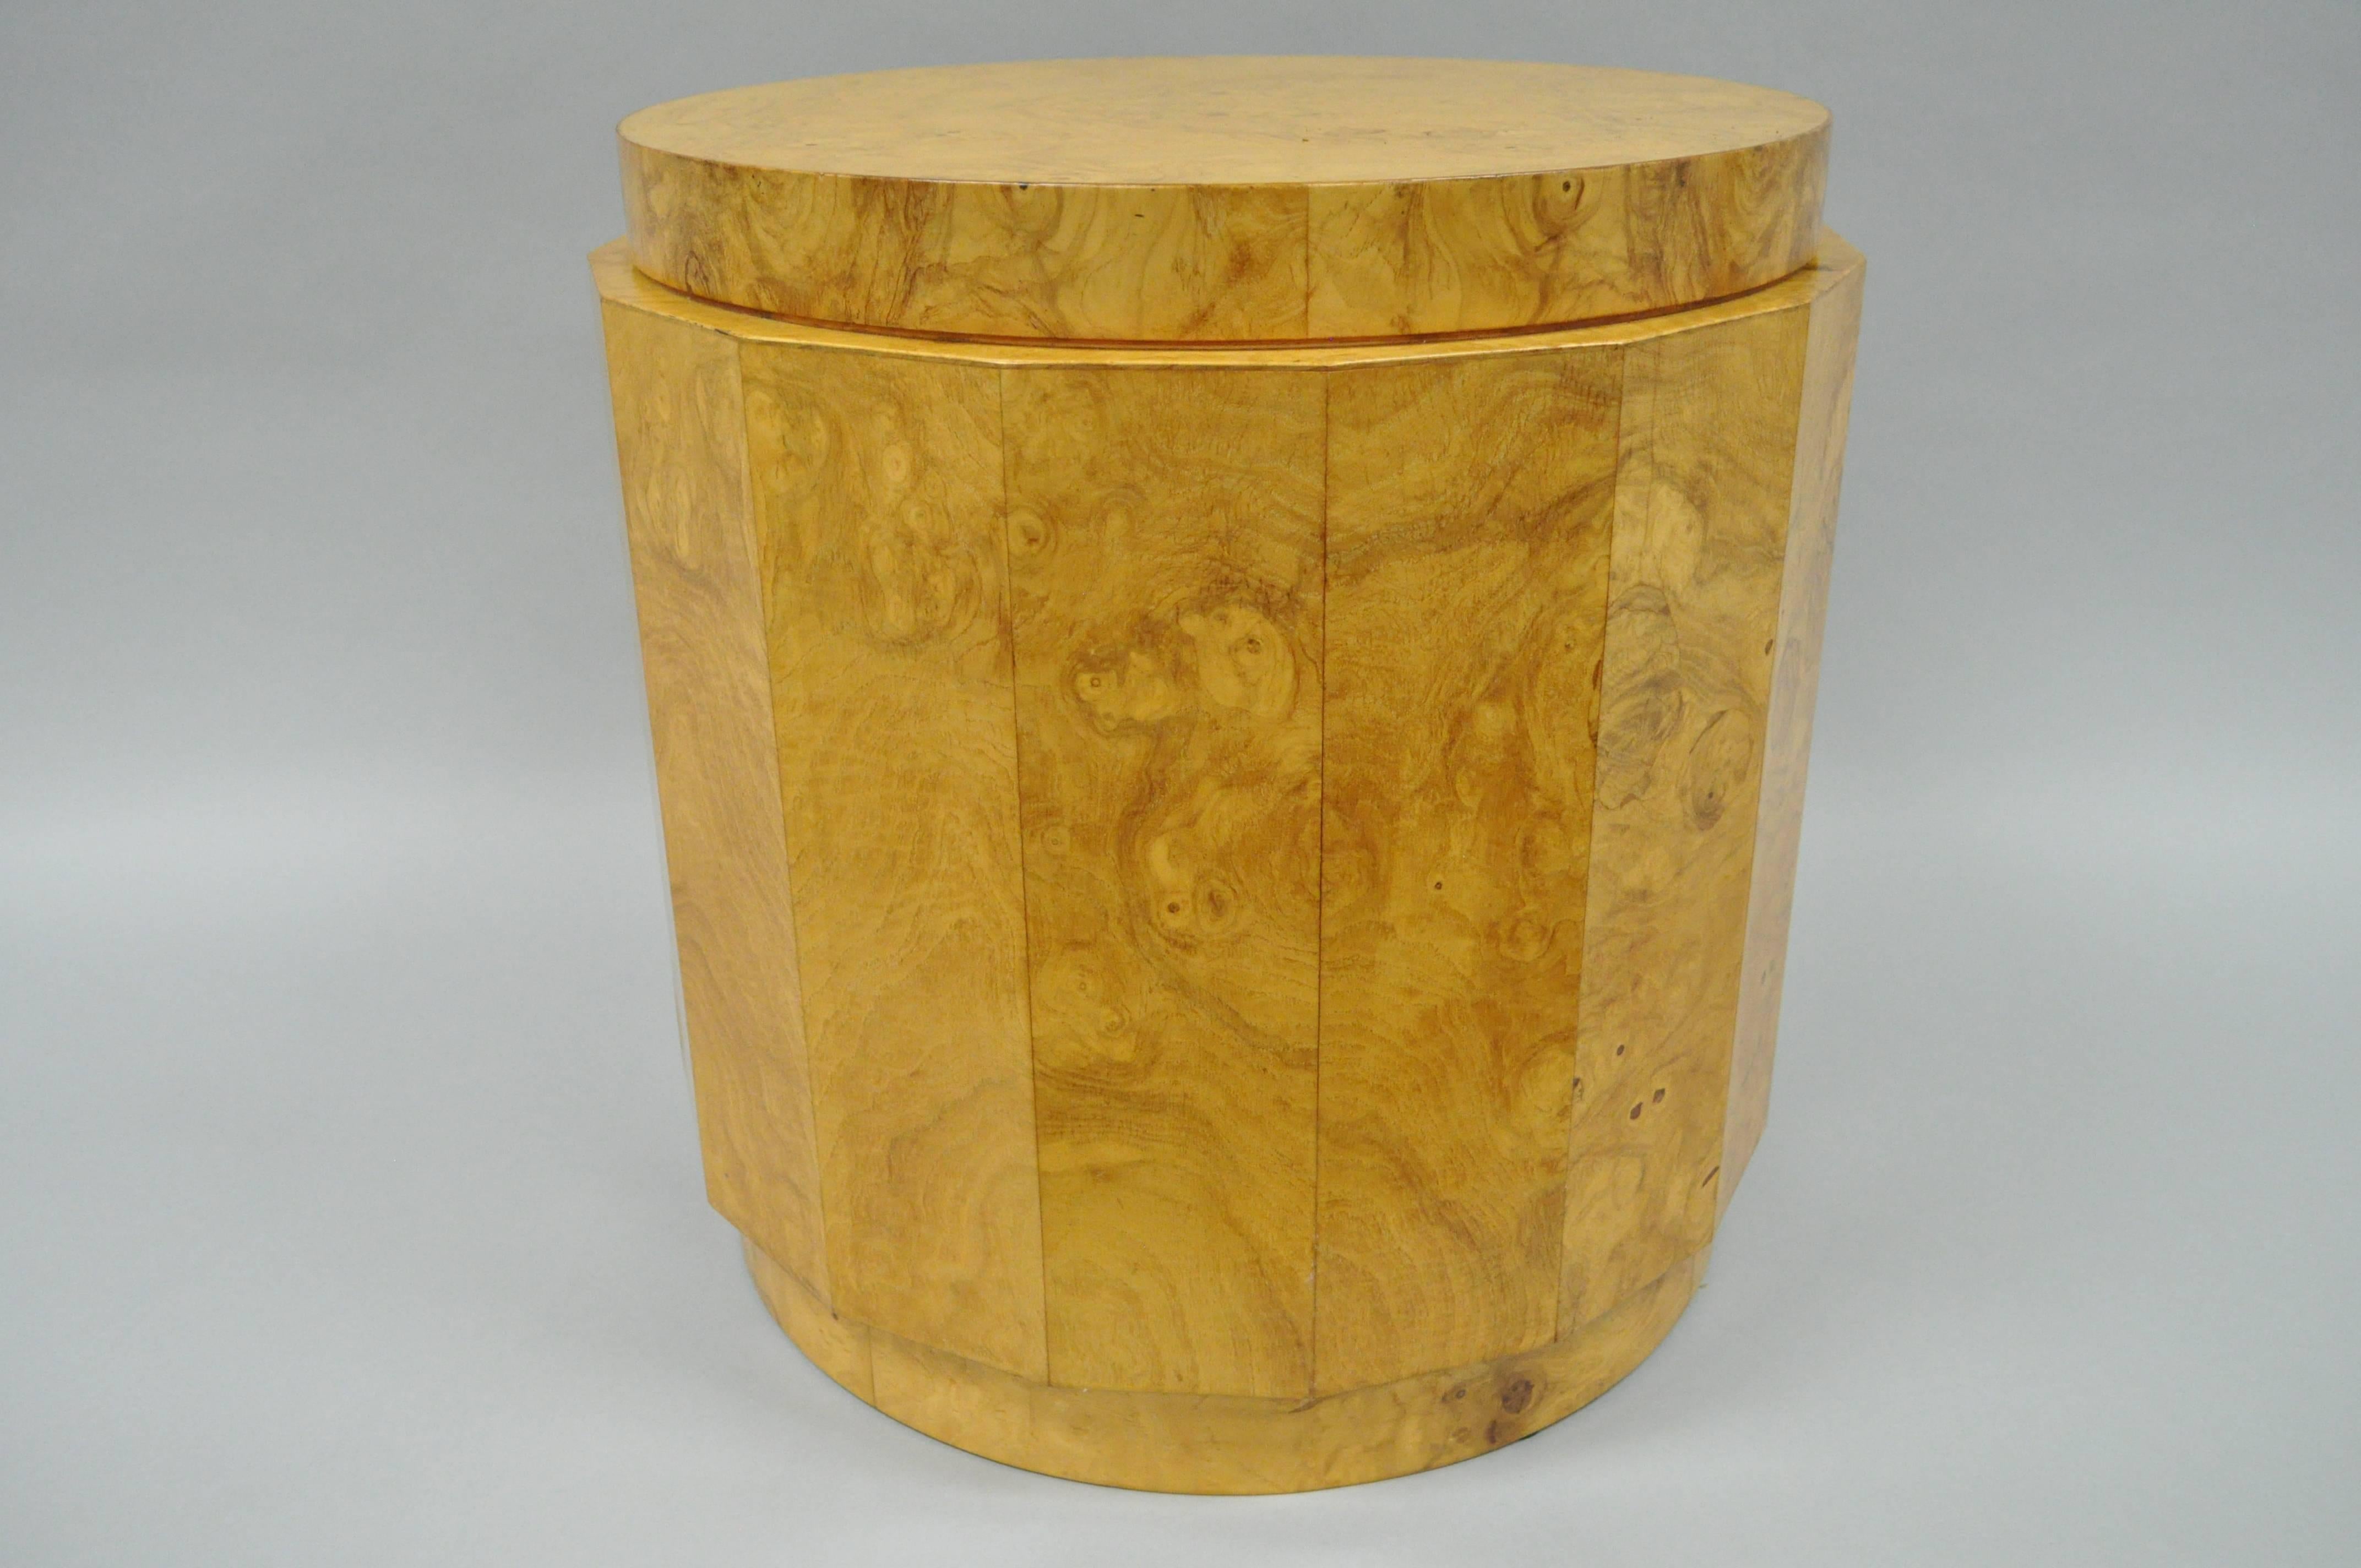 Vintage Mid-Century Modern Edward Wormley for dunbar burl wood pedestal side table 6302F. Item features a beautiful faceted columnar exterior, figured burl wood grain veneer and the original labels.